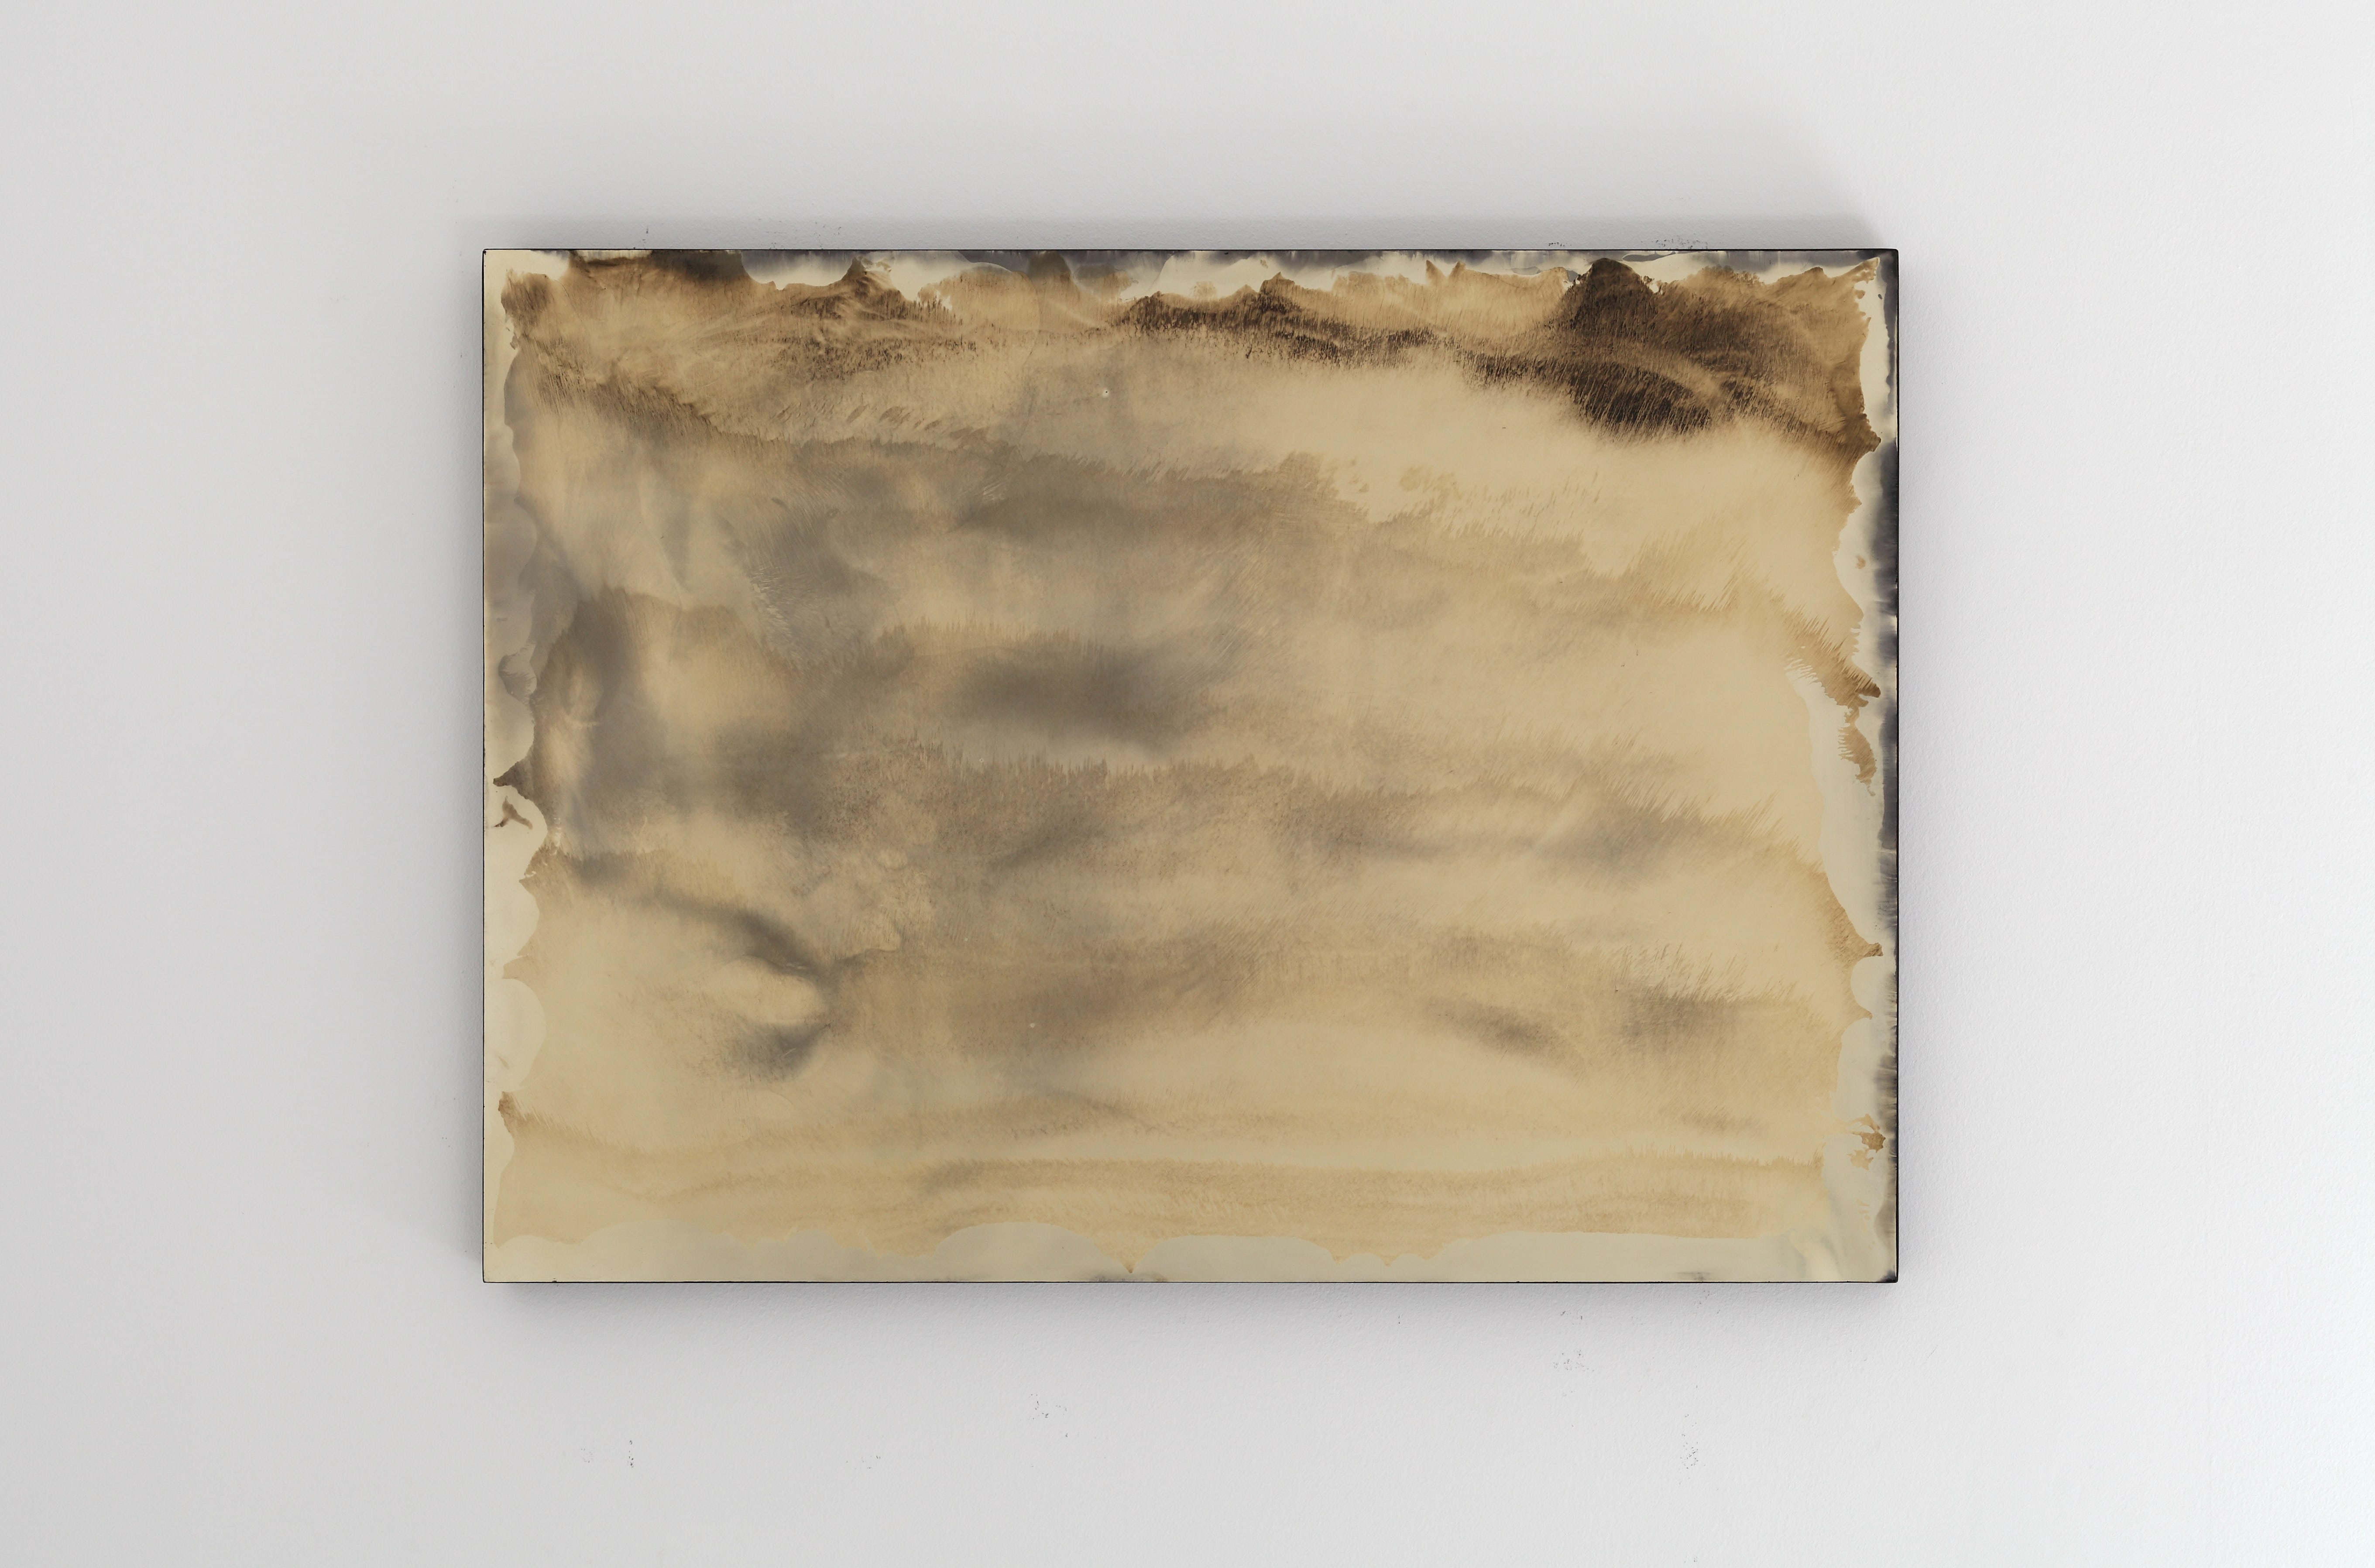 Alessandro Diaz de Santillana, R6, 2014, Hand-blown and slumped glass. Marino plywood and gold laquer, 78,2 x 109 cm